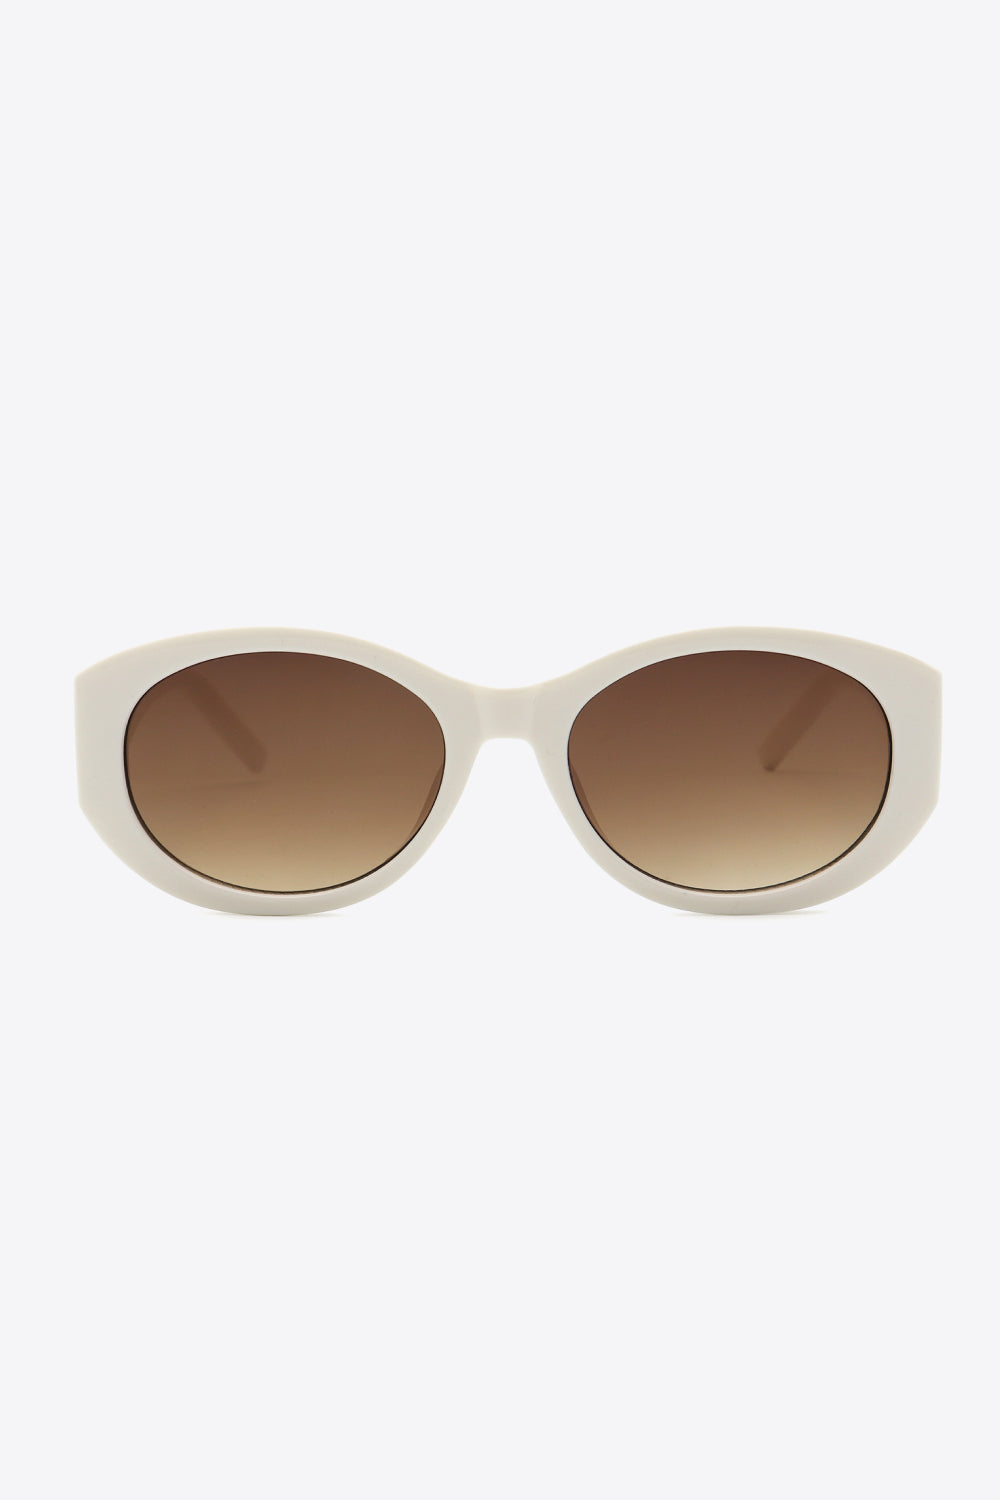 Uylee's Boutique UV400 Polycarbonate Sunglasses